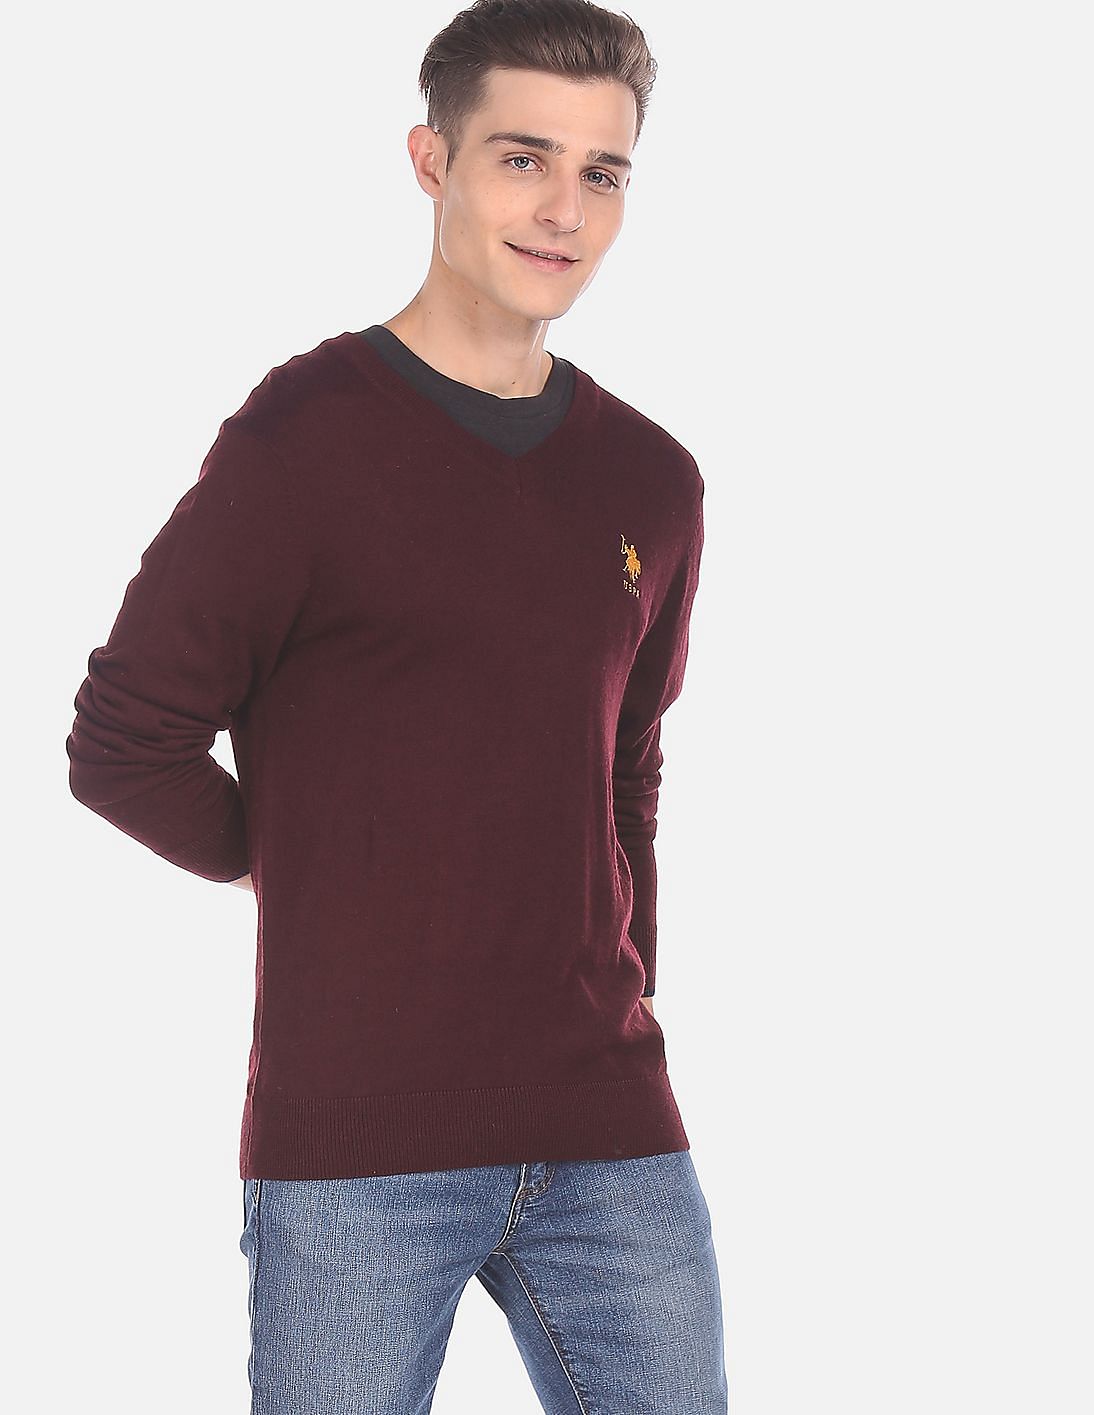 Buy U.S. Polo Assn. Men Wine V-Neck Solid Sweater - NNNOW.com